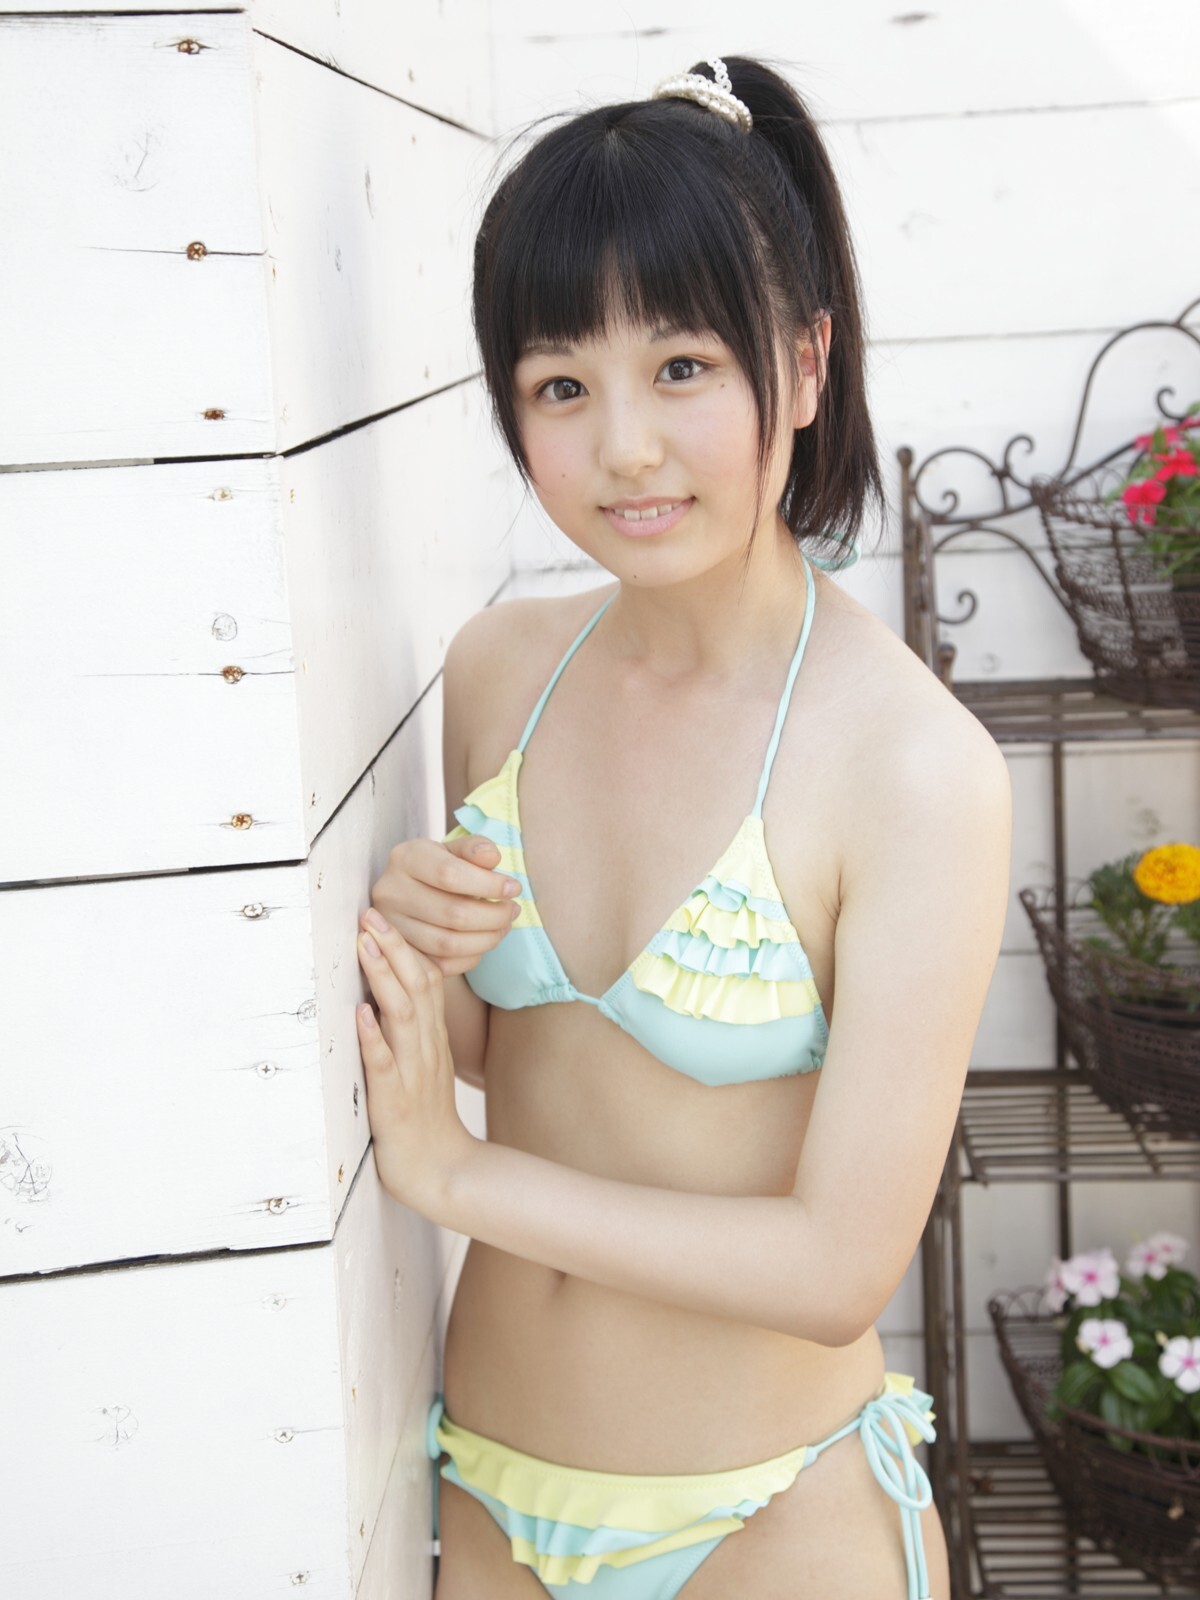 Hiromi Kurita 20110922[ Sabra.net ]Photo set of beautiful Japanese girls